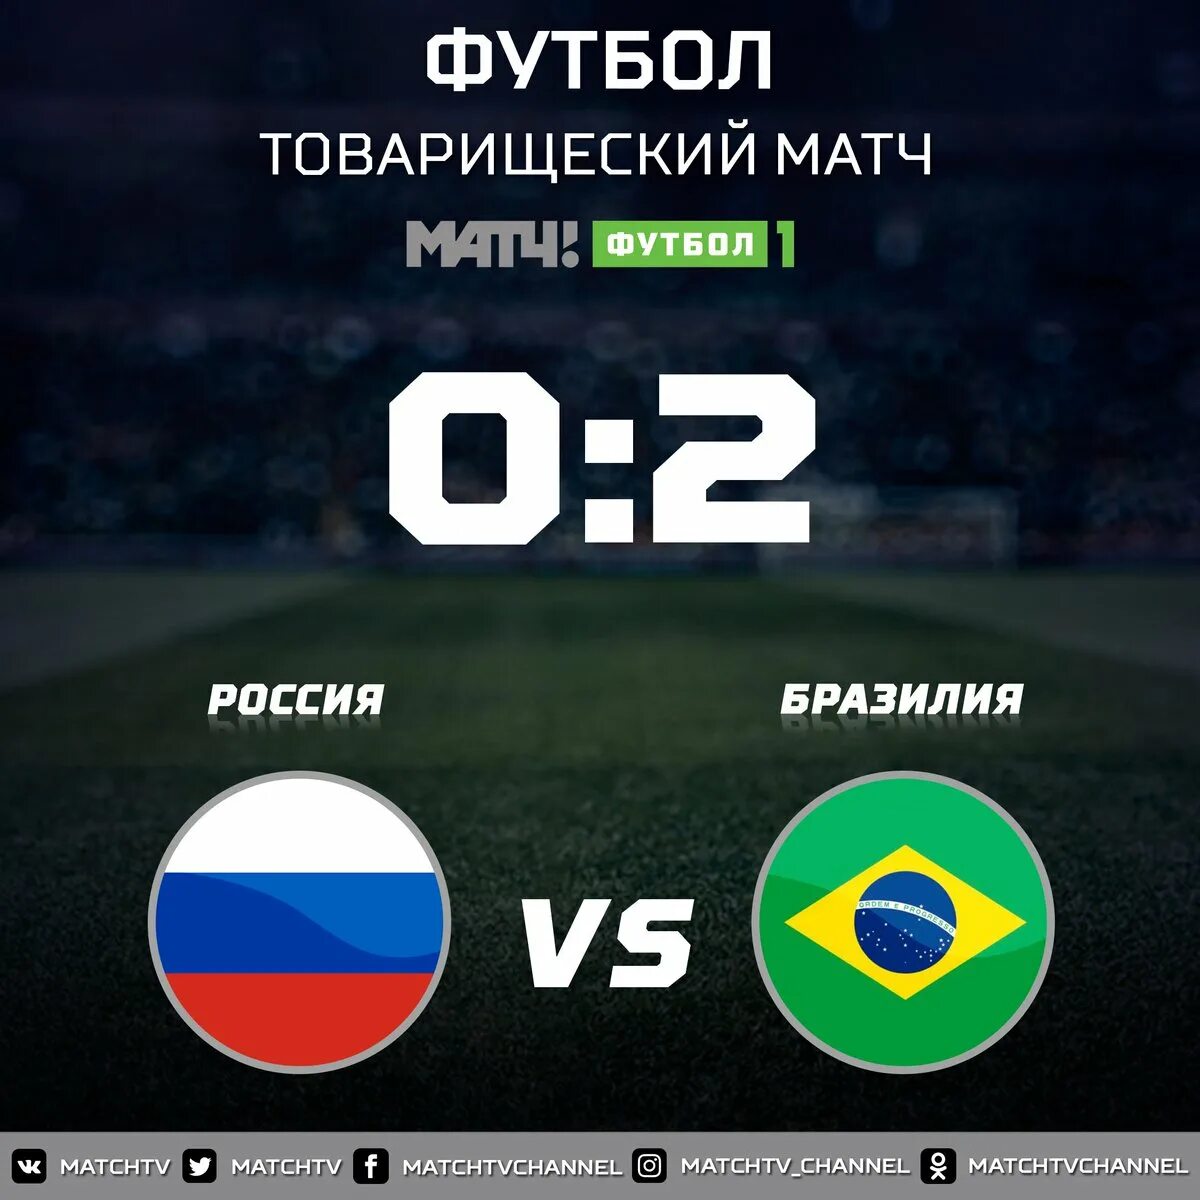 Счет в футболе. Счет матча футбол. Россия Бразилия футбол счет. Счеты для футбола.